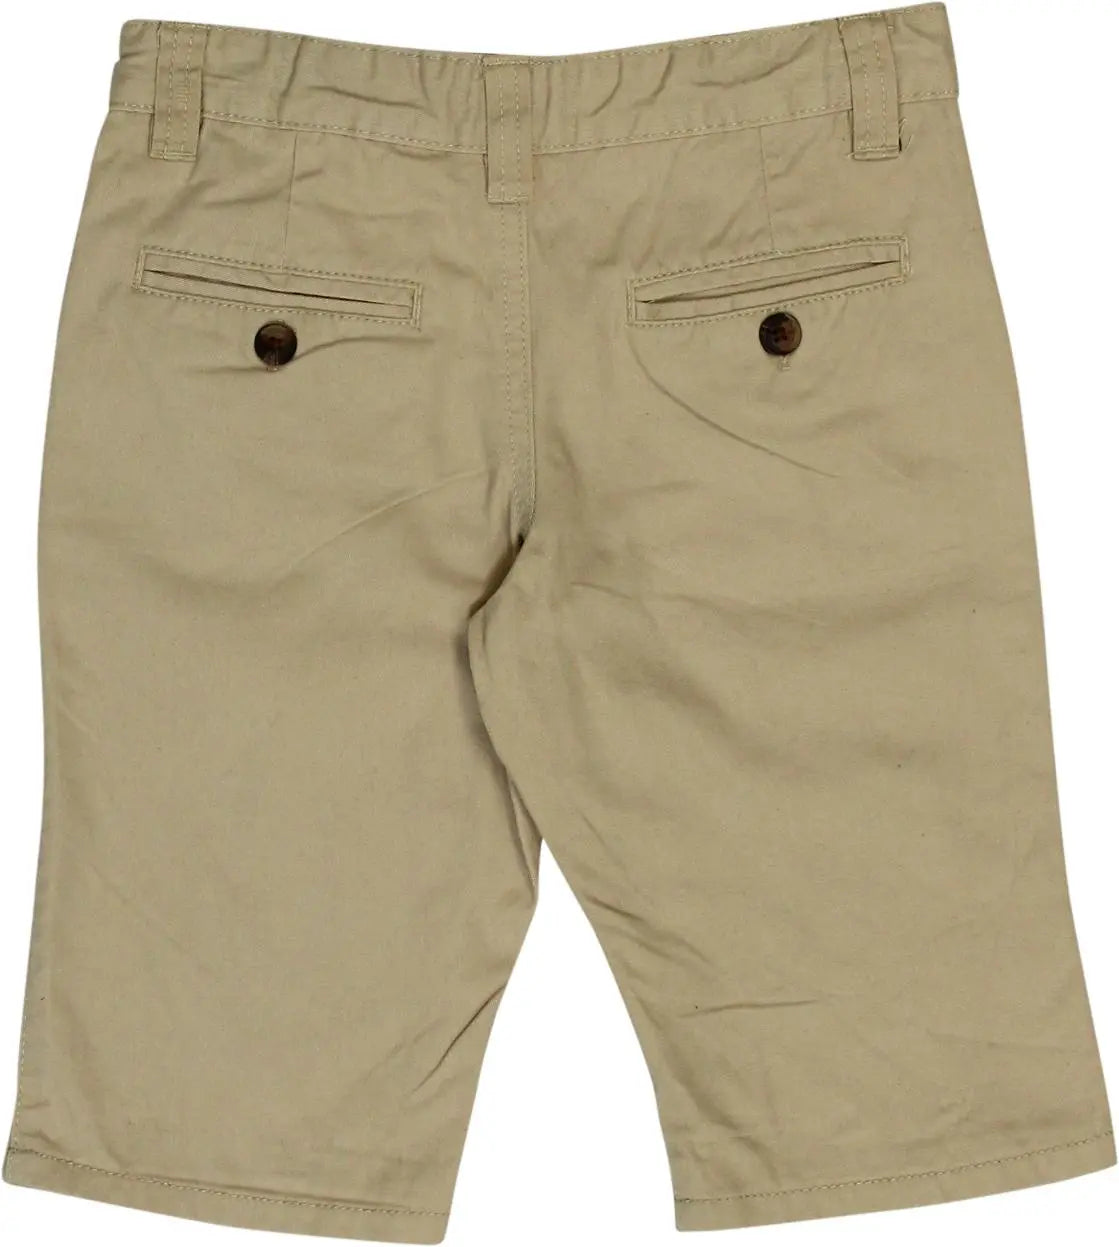 Denim Co - Beige Shorts- ThriftTale.com - Vintage and second handclothing